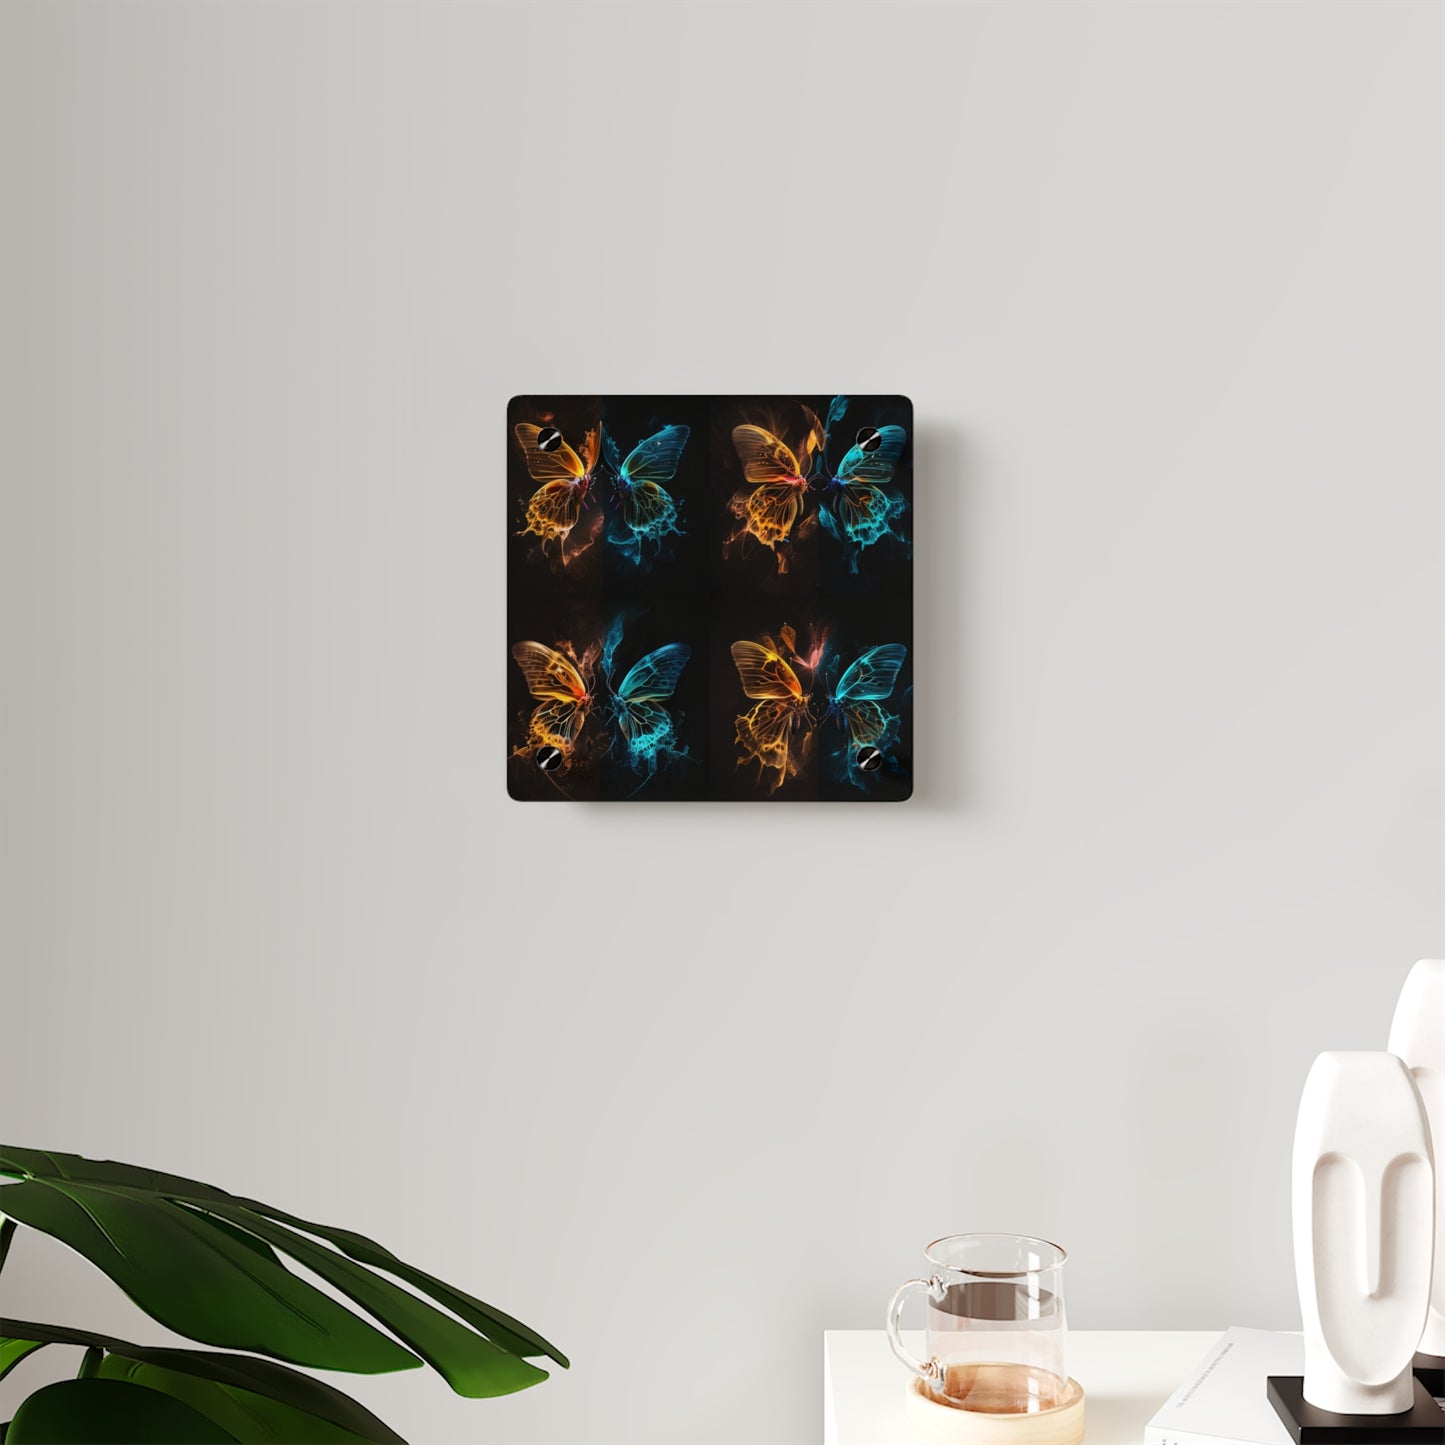 Acrylic Wall Art Panels Kiss Neon Butterfly 5